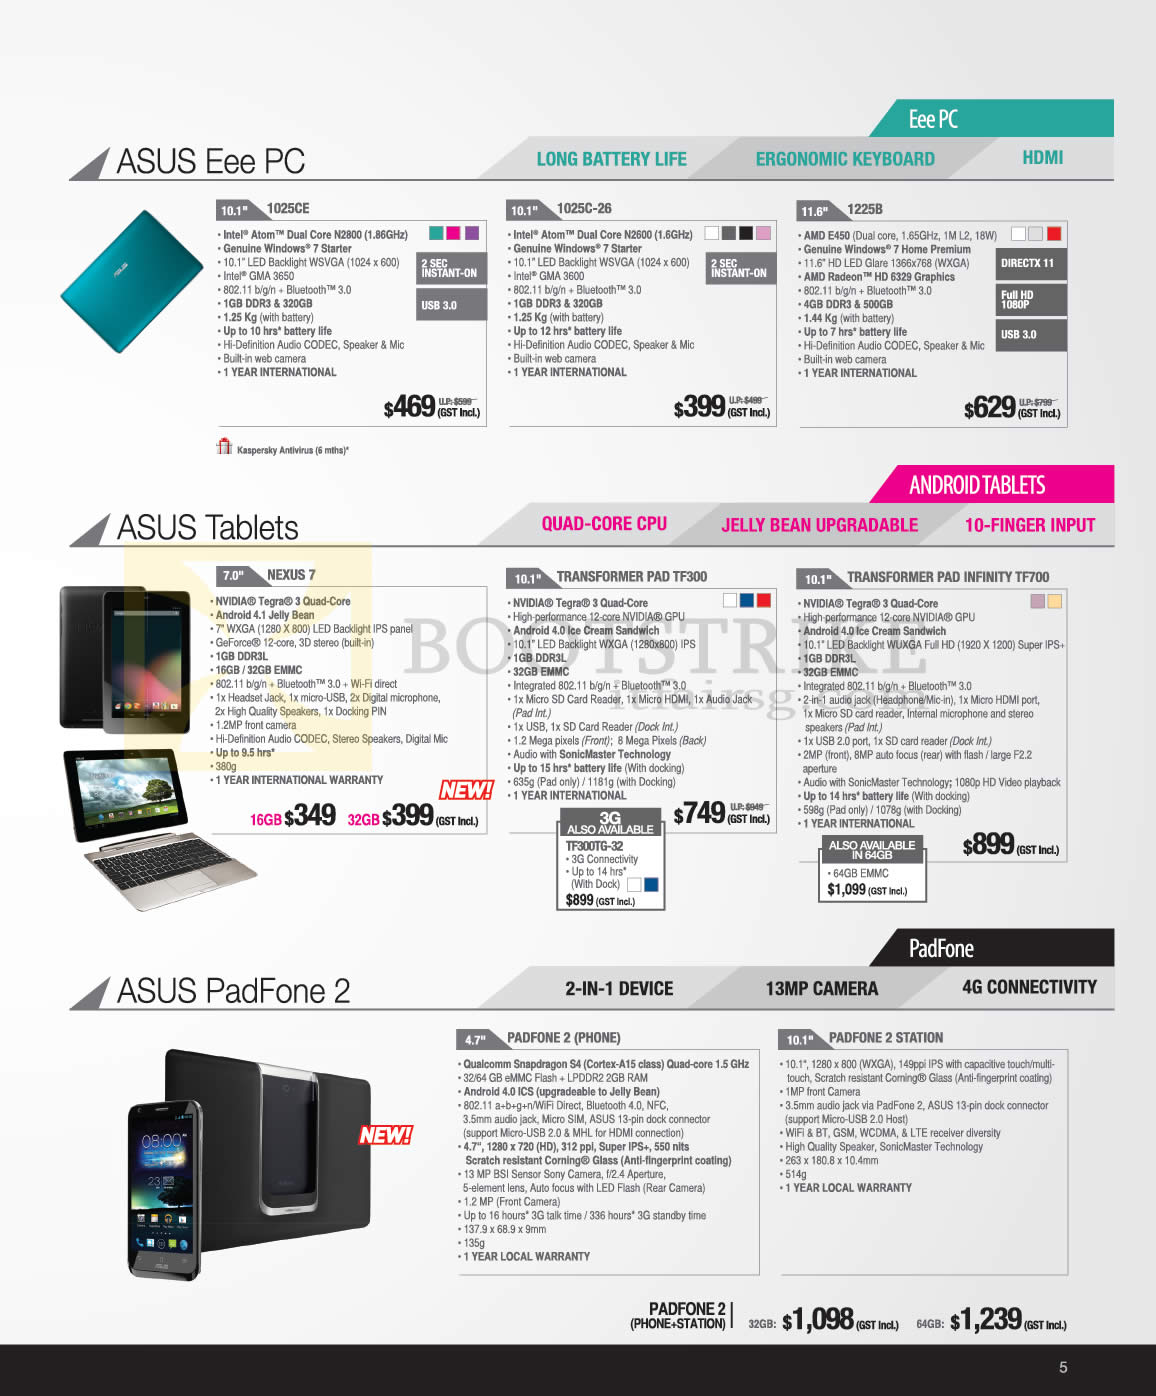 SITEX 2012 price list image brochure of ASUS Eee Pc 1025ce 1025c-26 1225b, Tablets Nexus 7, Transformer Pad Tf300, Infinity Tf700, Padfone 2 Phone, Station